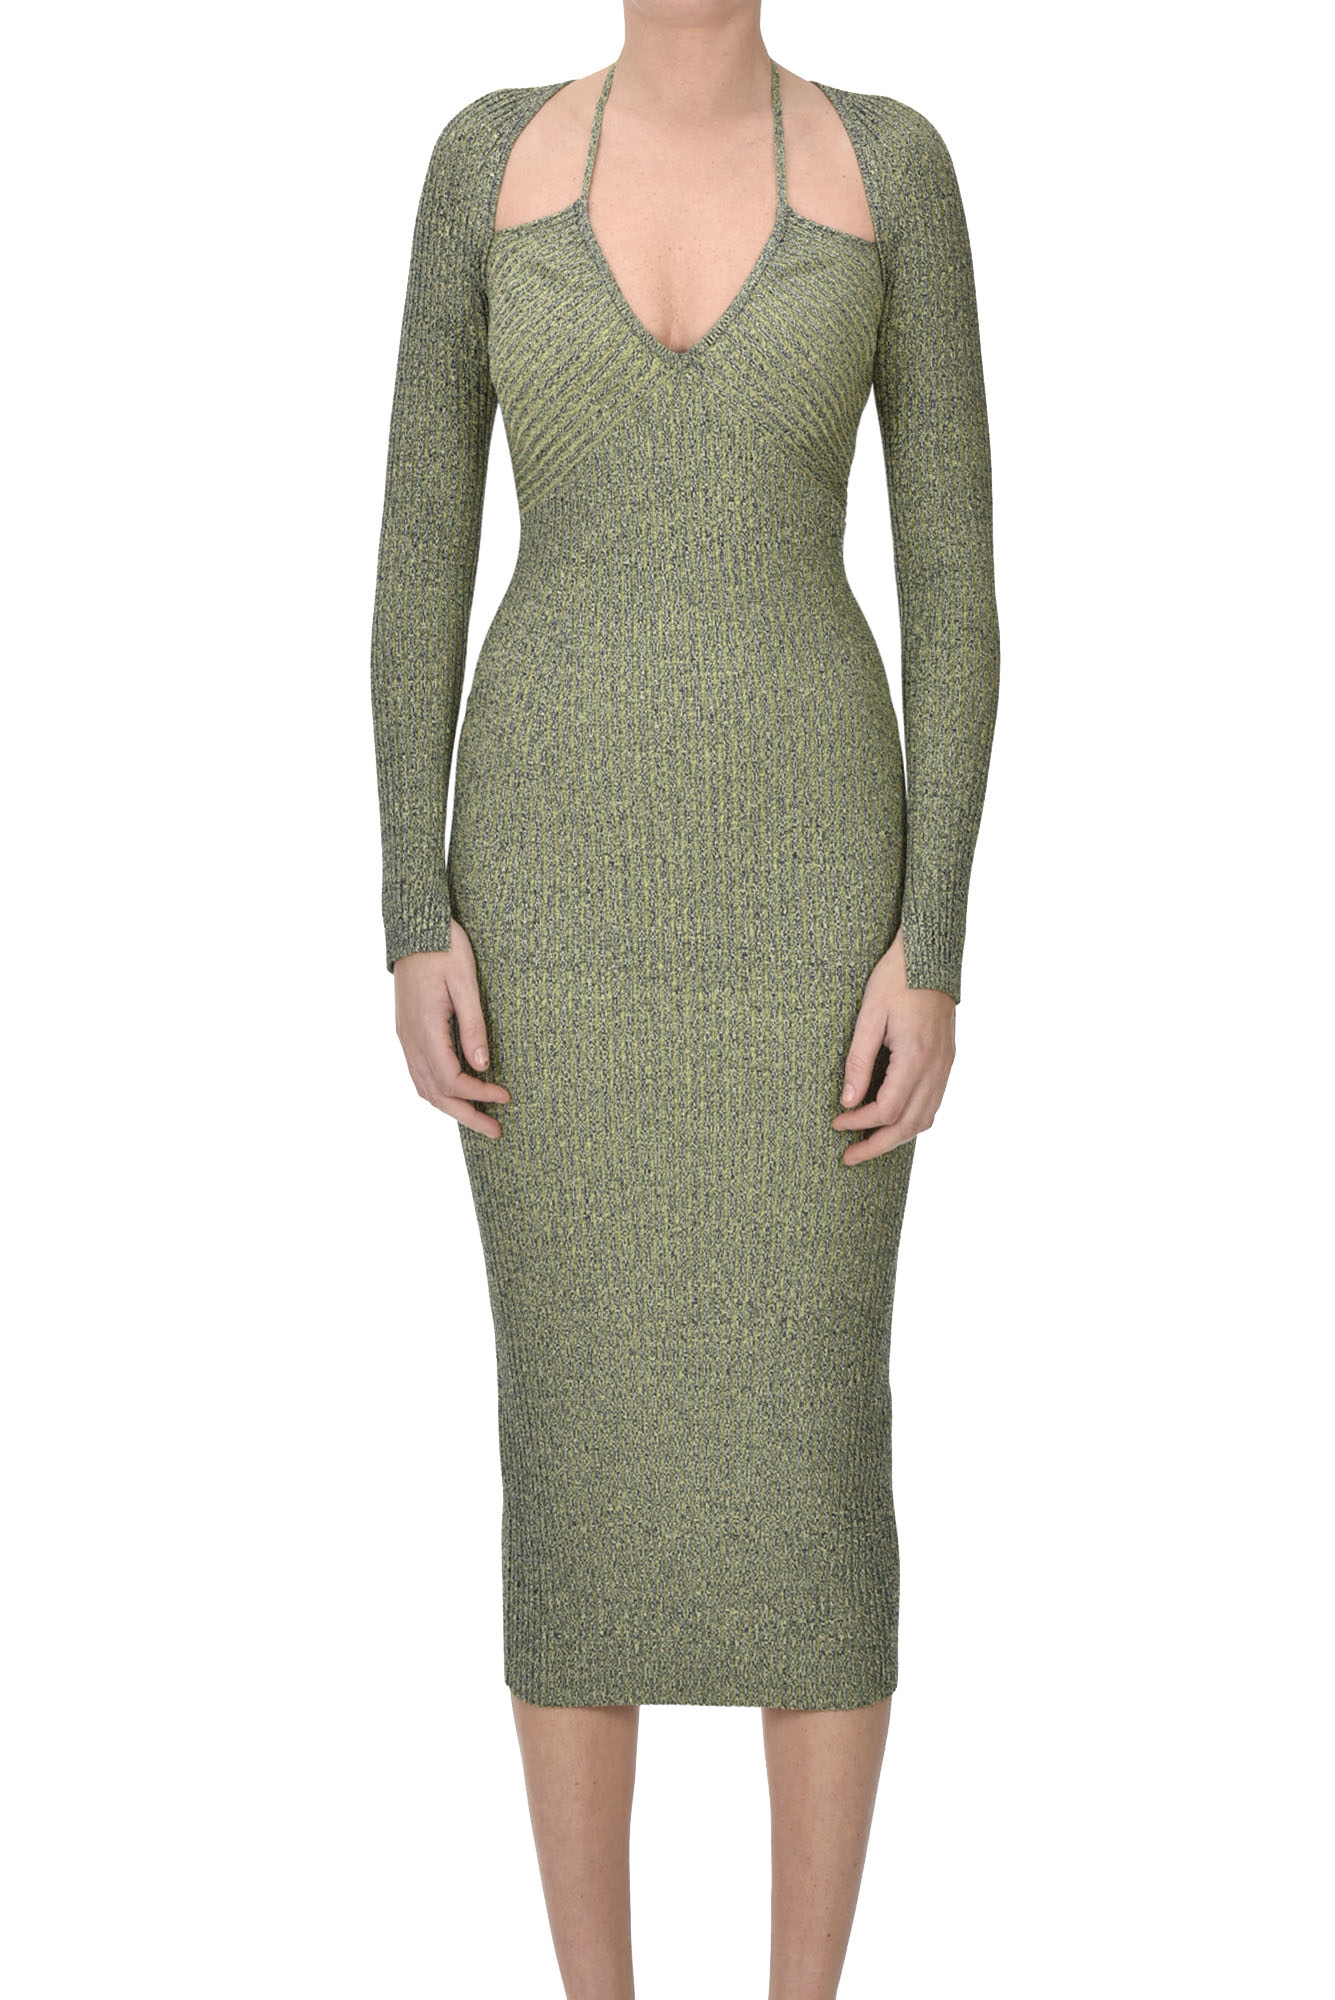 Jonathan Simkhai Ribbed Knit Dress In Lime